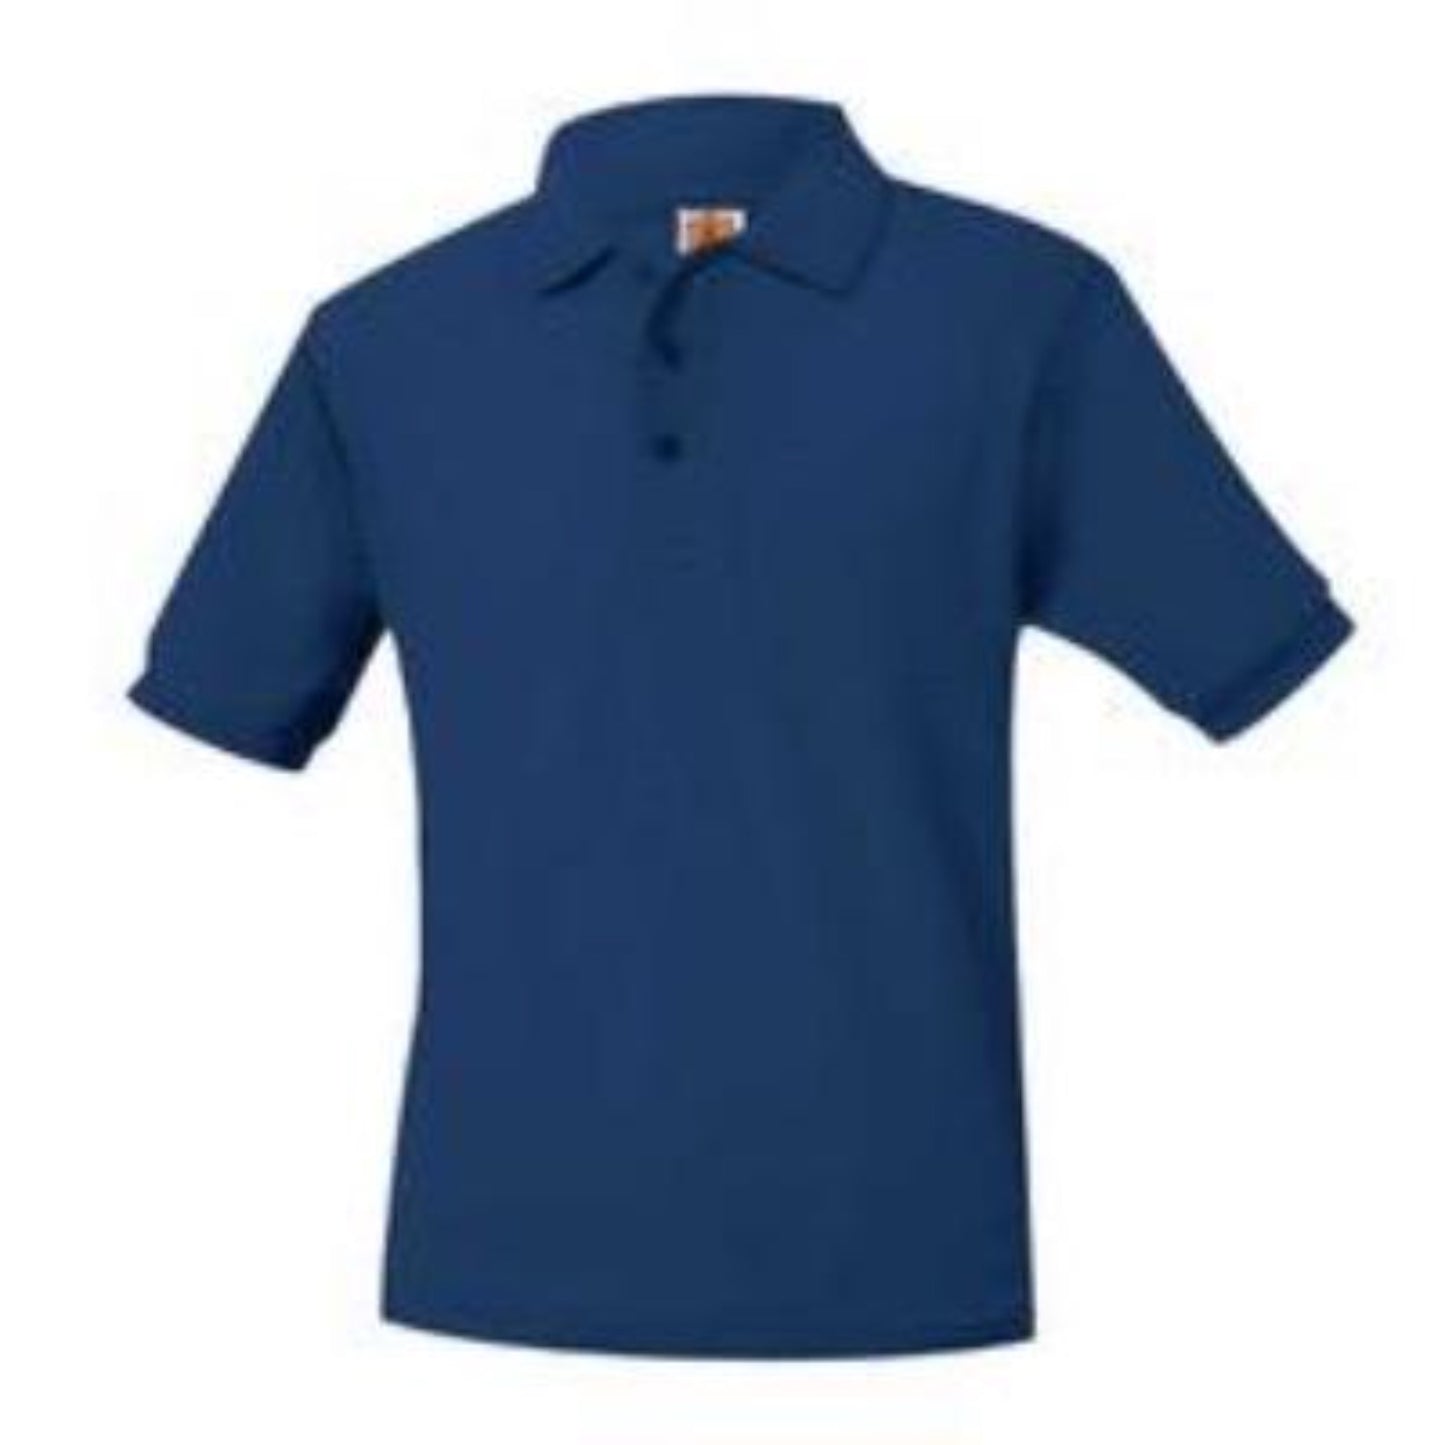 STL Unisex Short Sleeve Pique Knit Polo-Navy